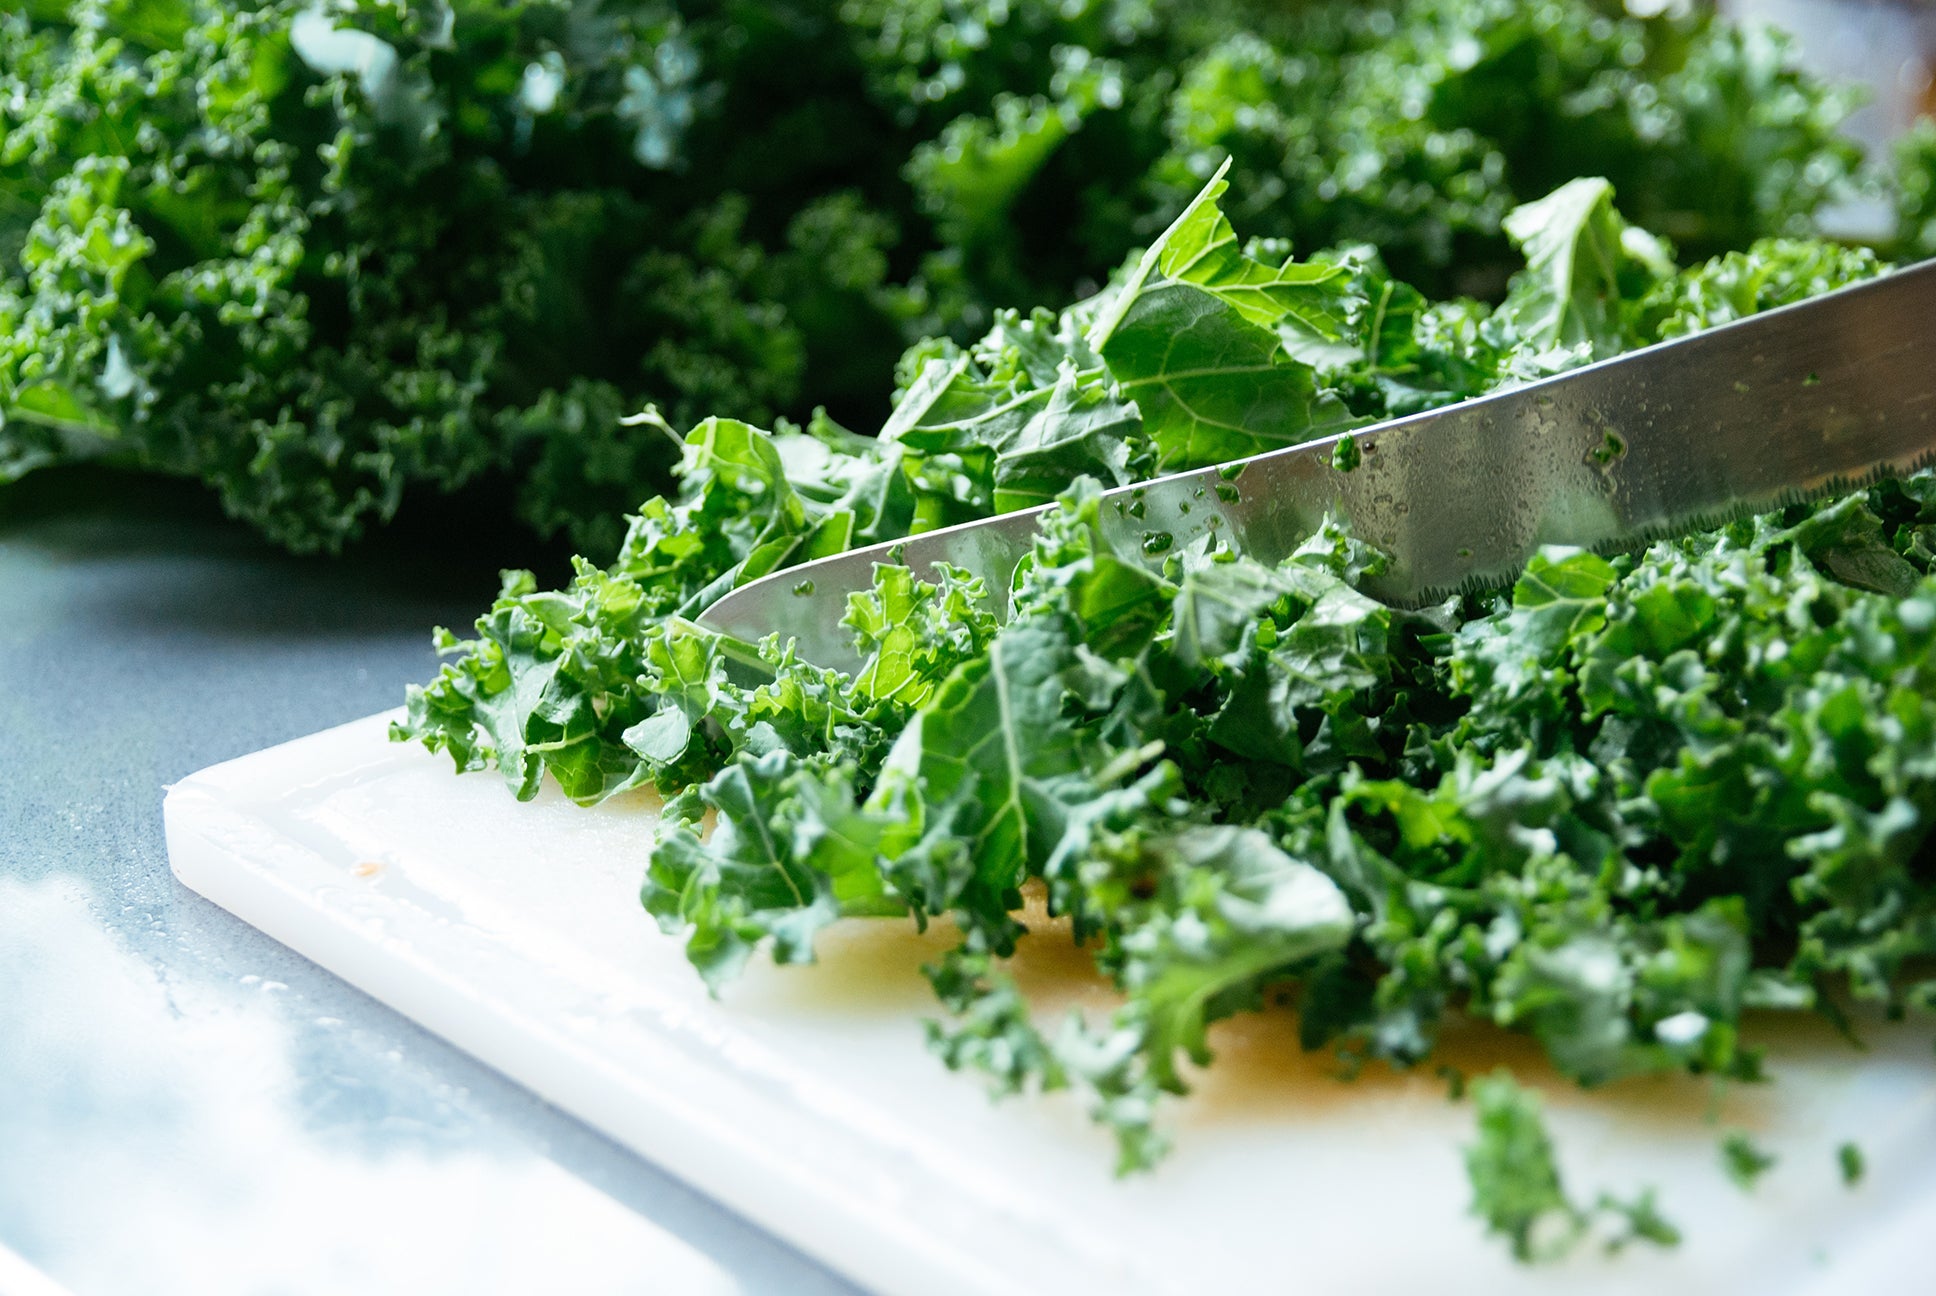 Cutting up fresh kale used in Kekoa Foods organic baby food.